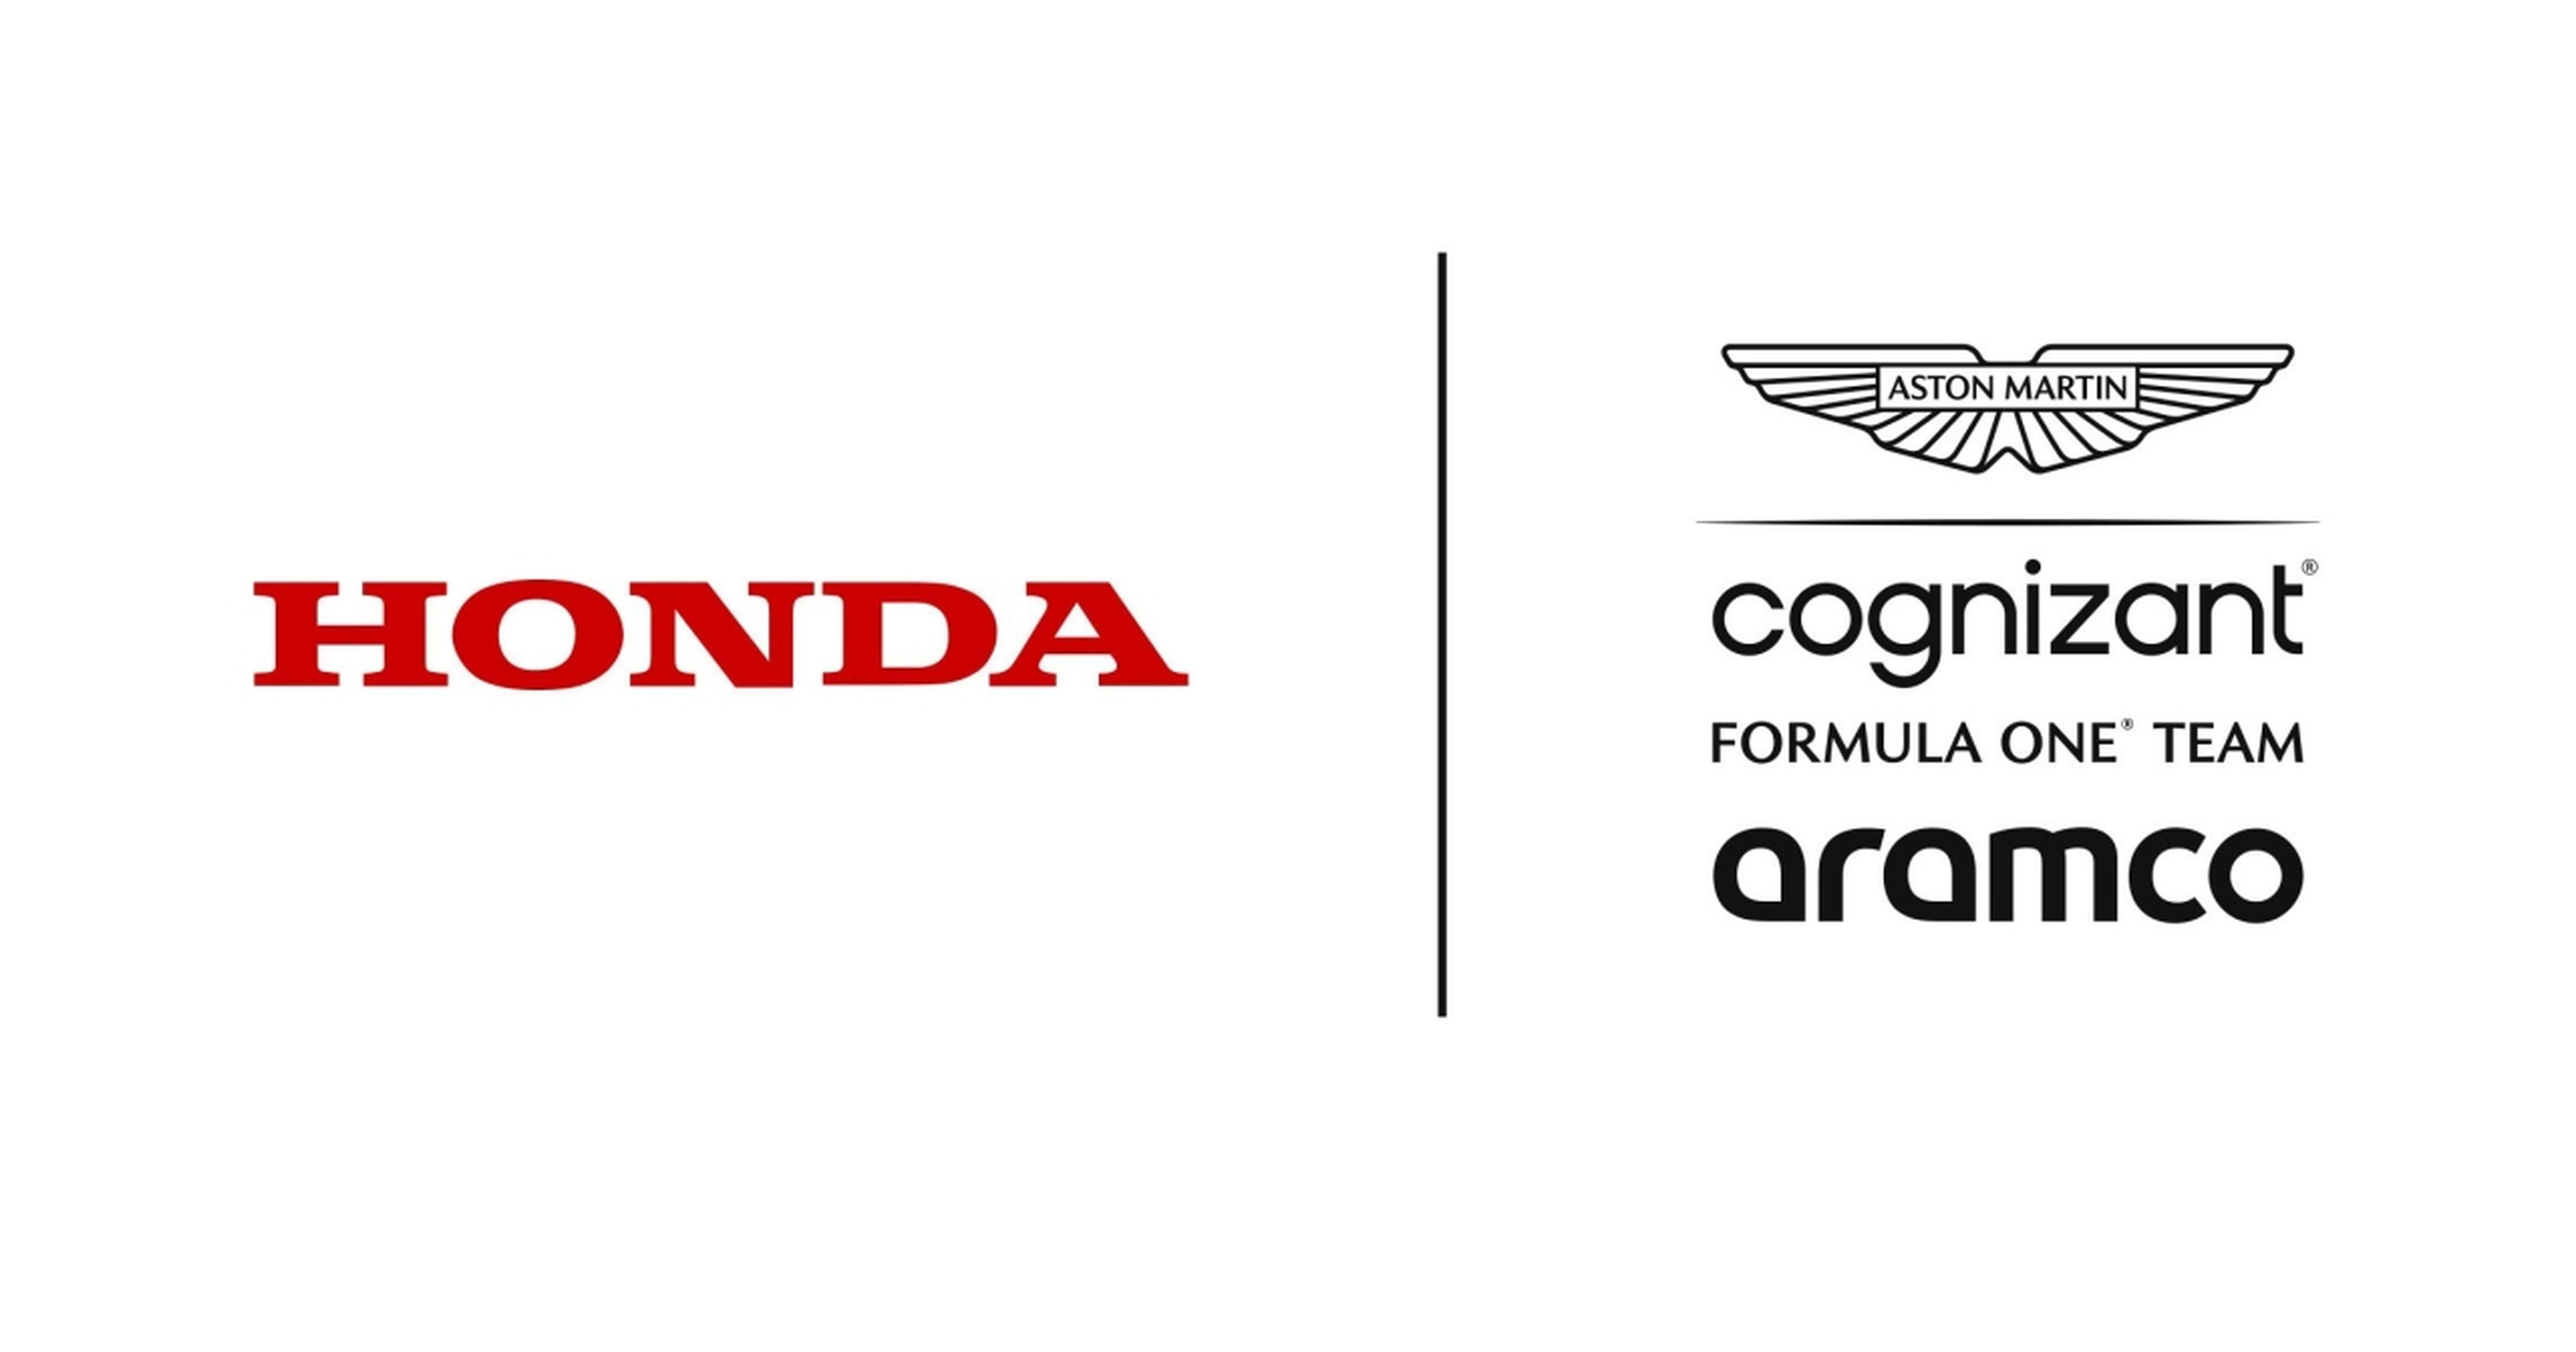 Honda y Aston Martin